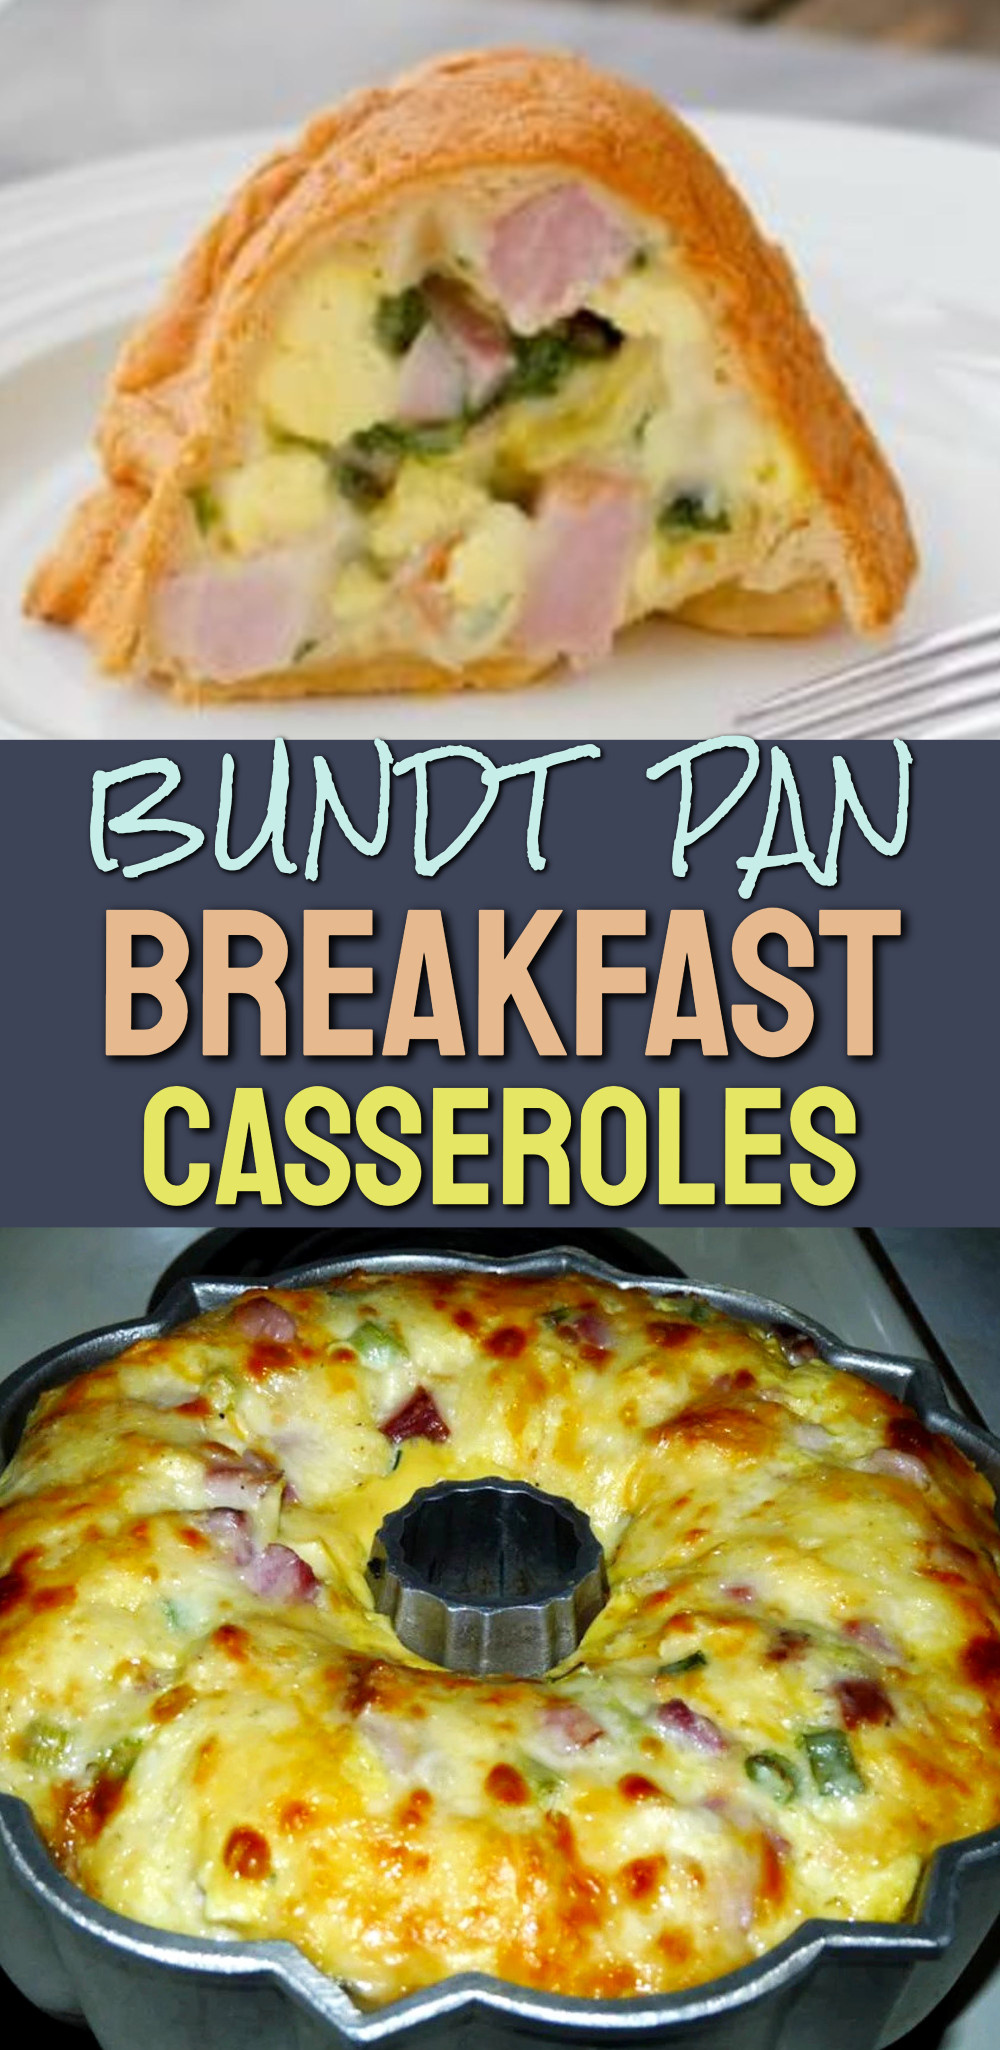 Bundt Pan Breakfast Casseroles For Feeding a Brunch Potluck Party Crowd